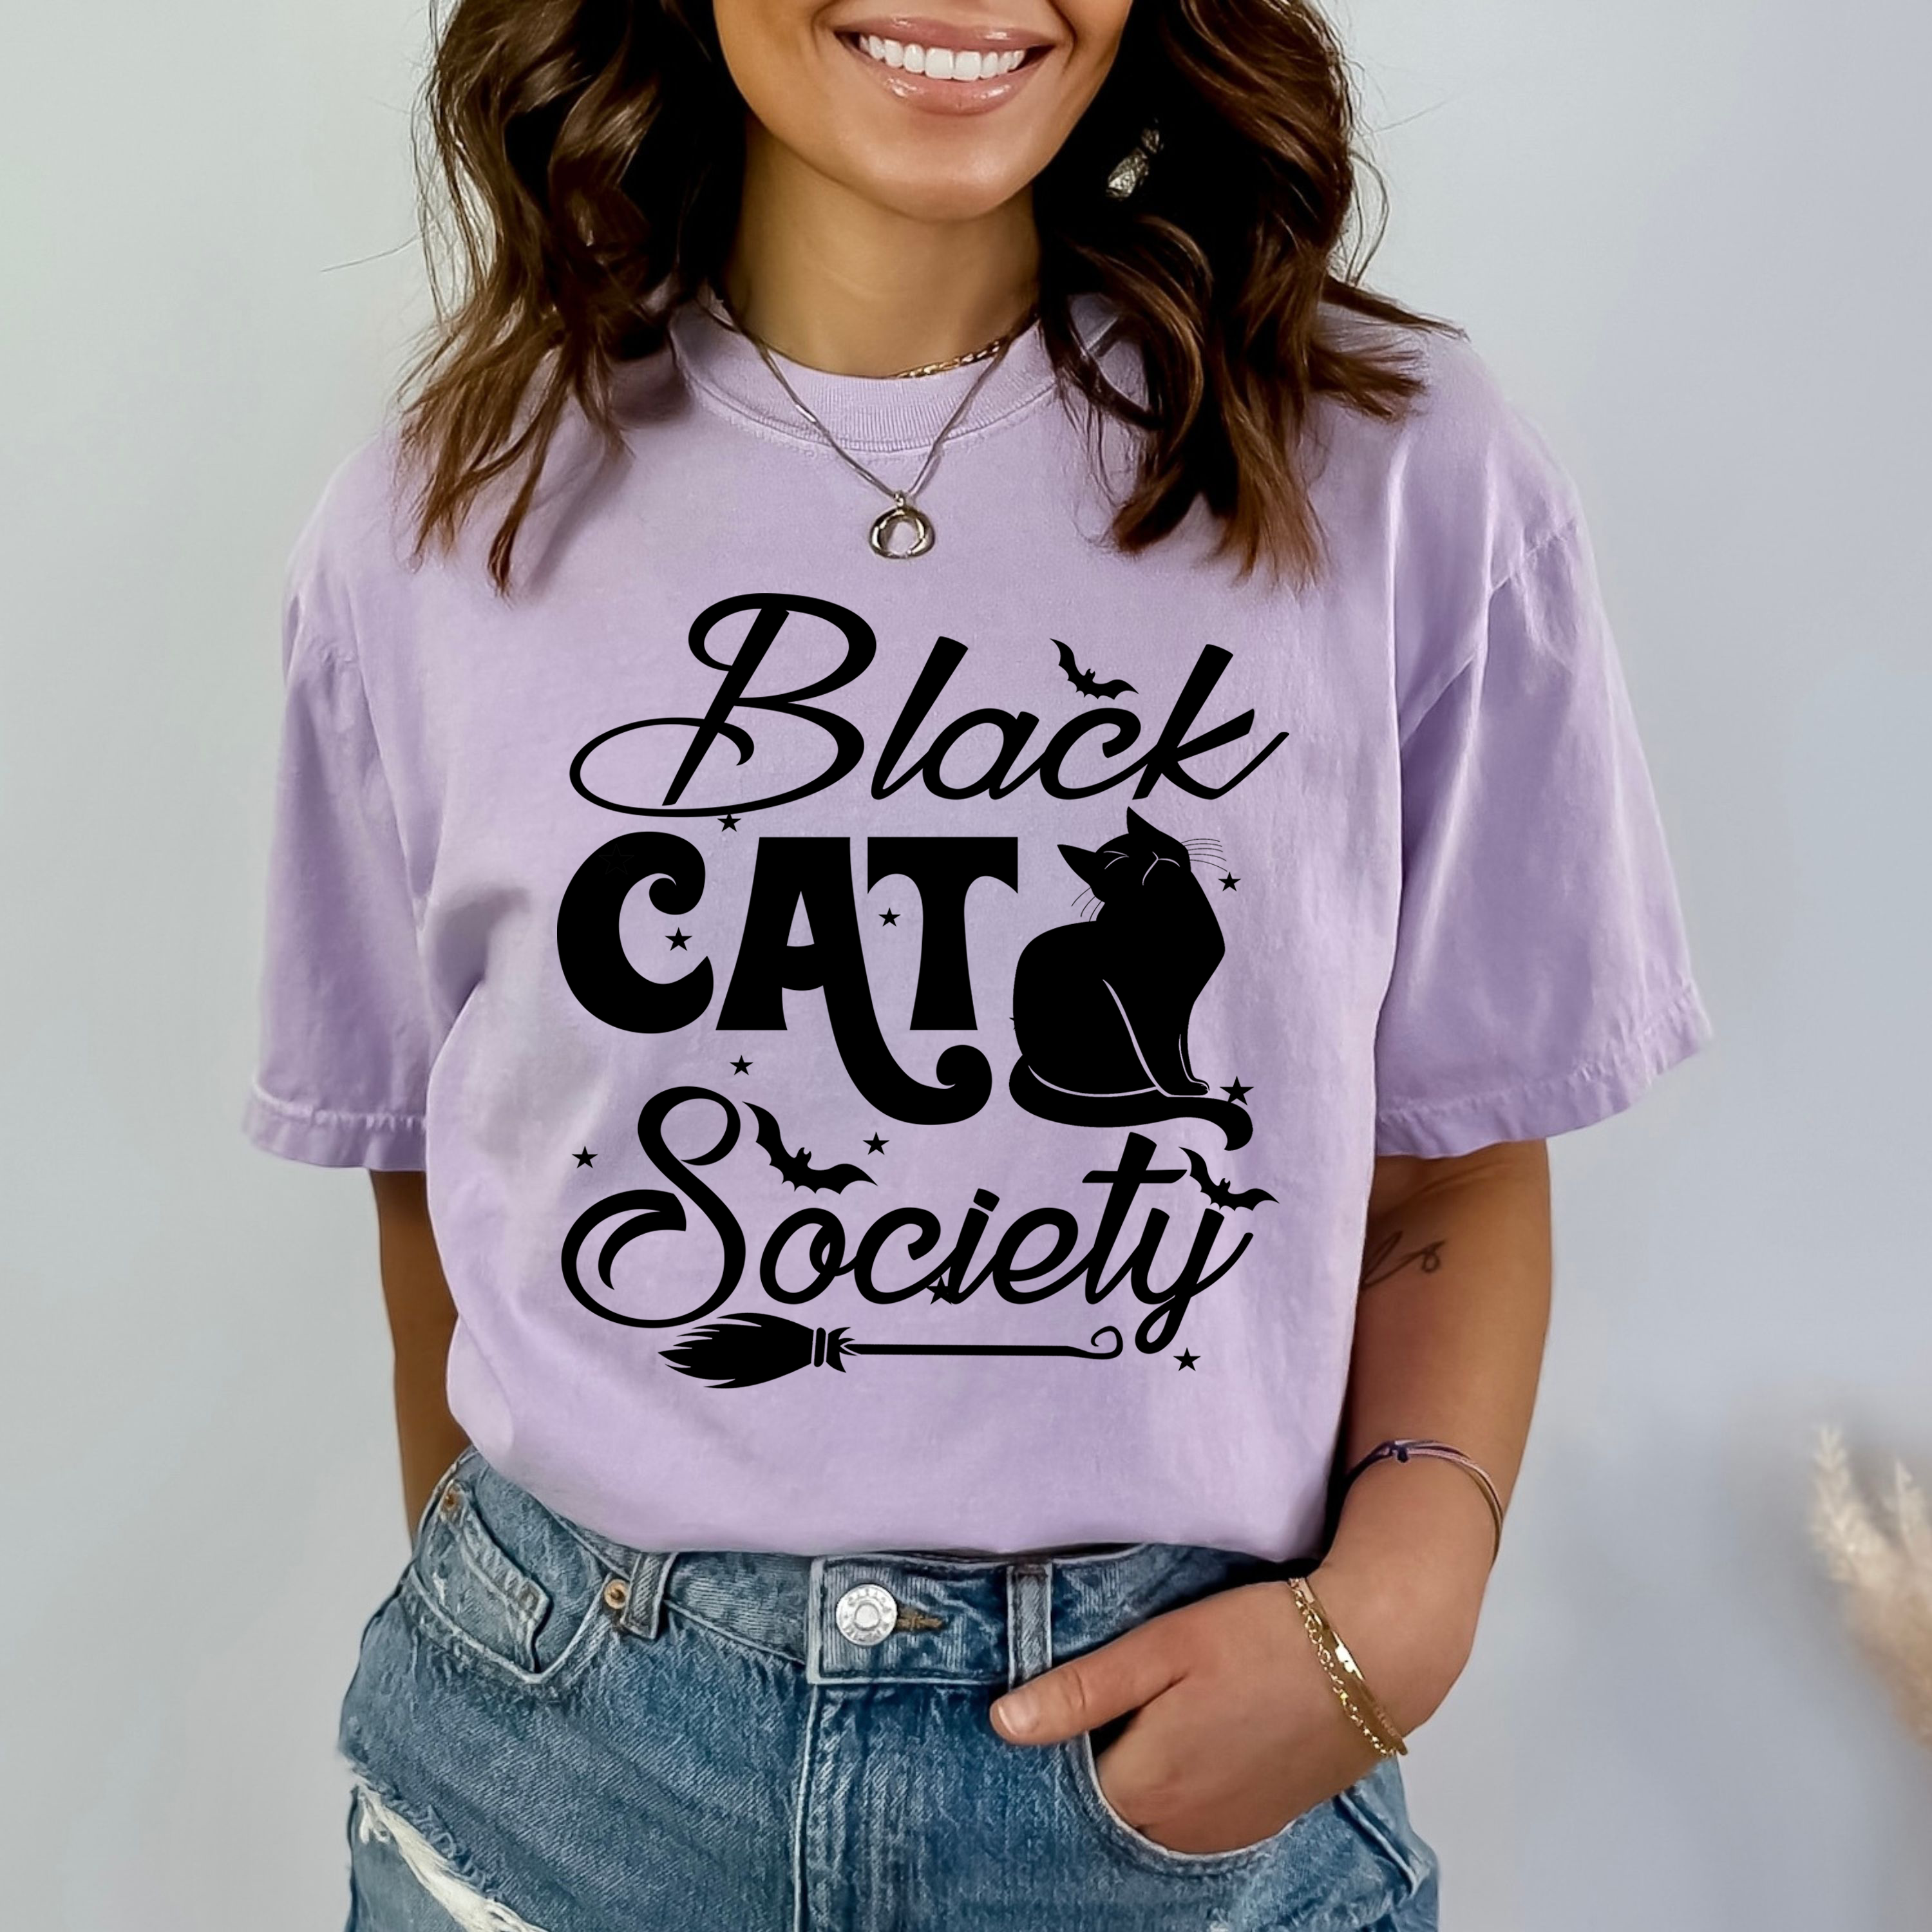 Black cat society  - Bella Canvas